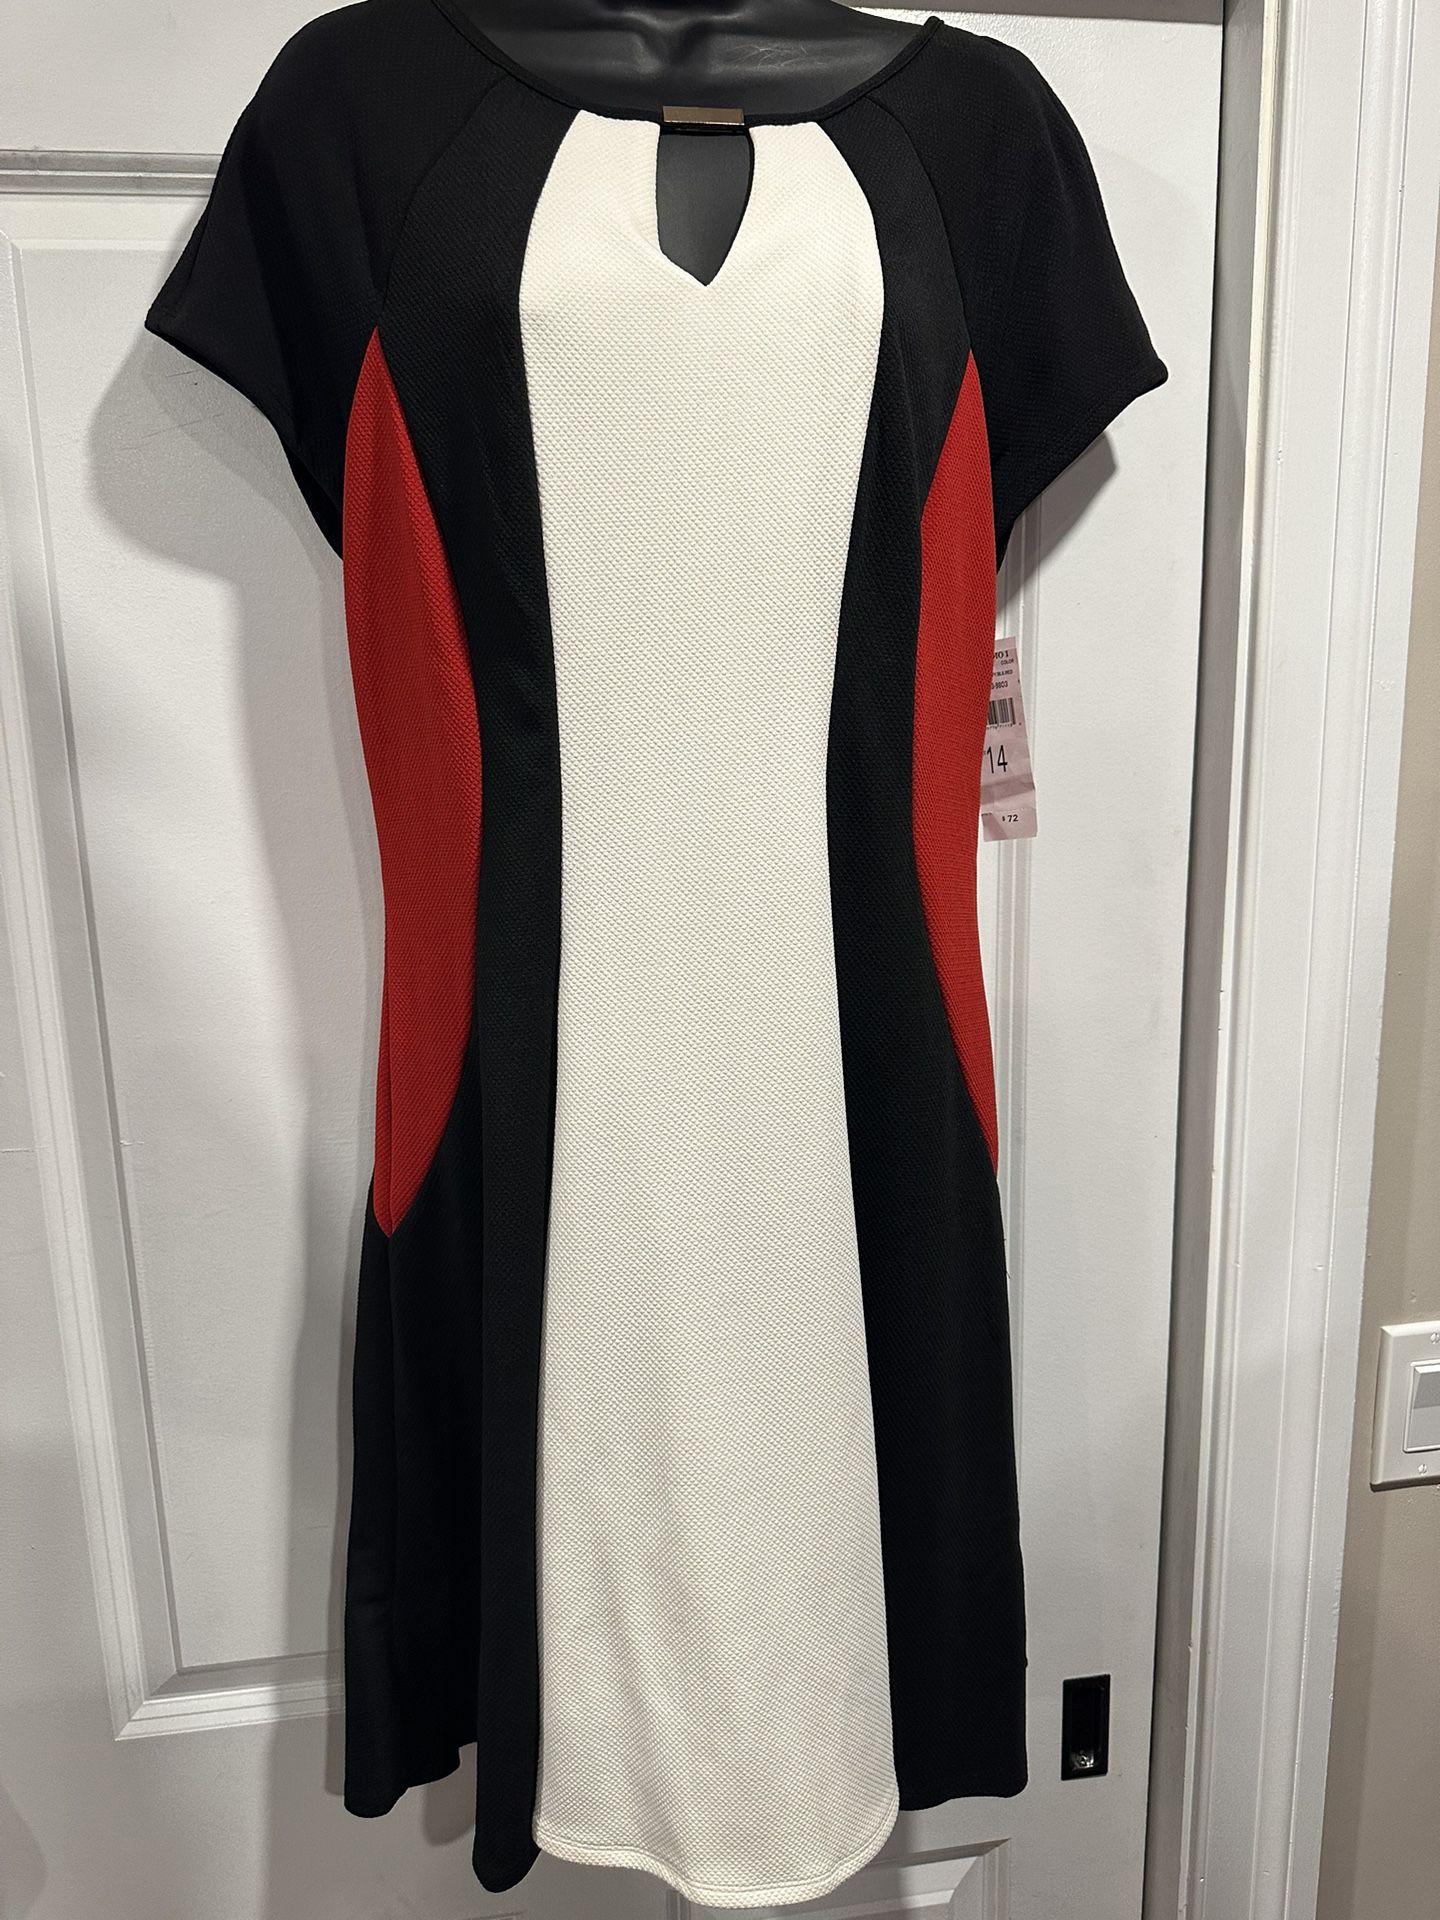 Modern Colorblock Sheath Dress - Size 14